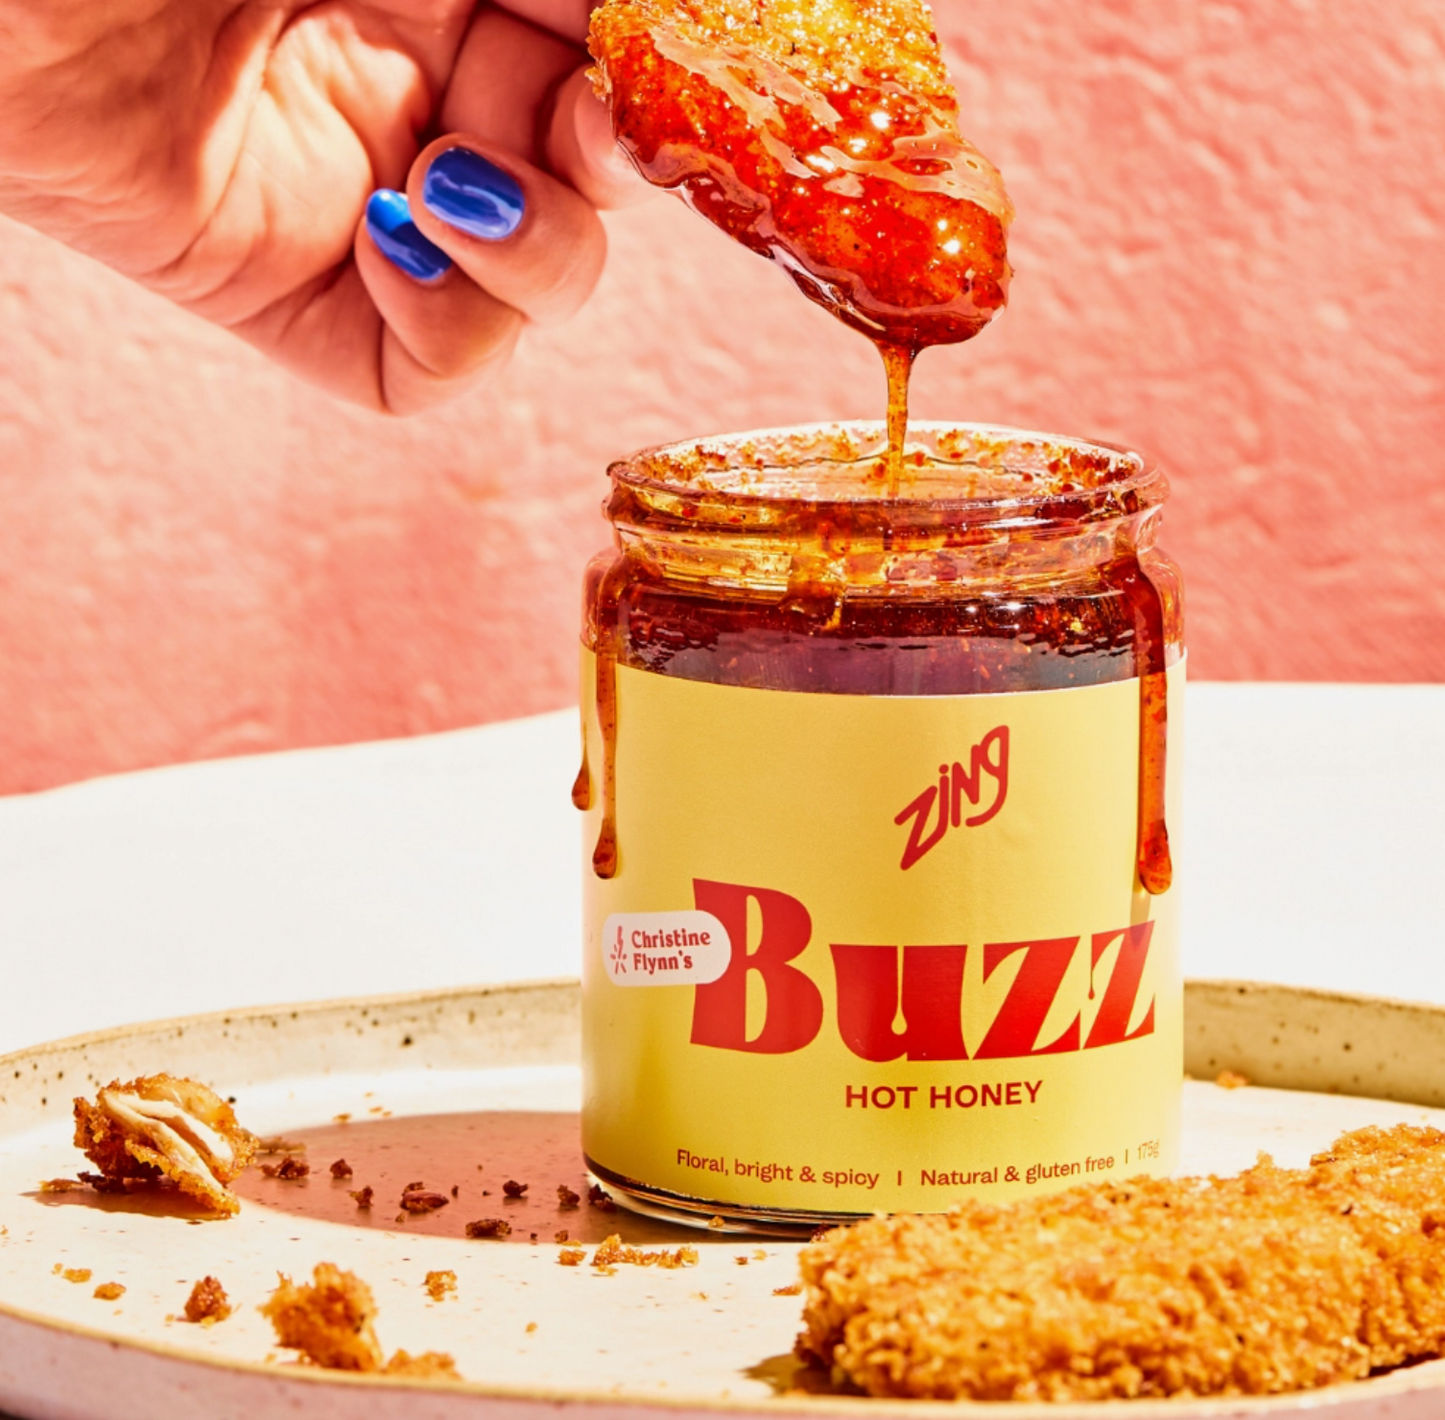 Buzz Hot Honey by Zing Pantry Shortcuts